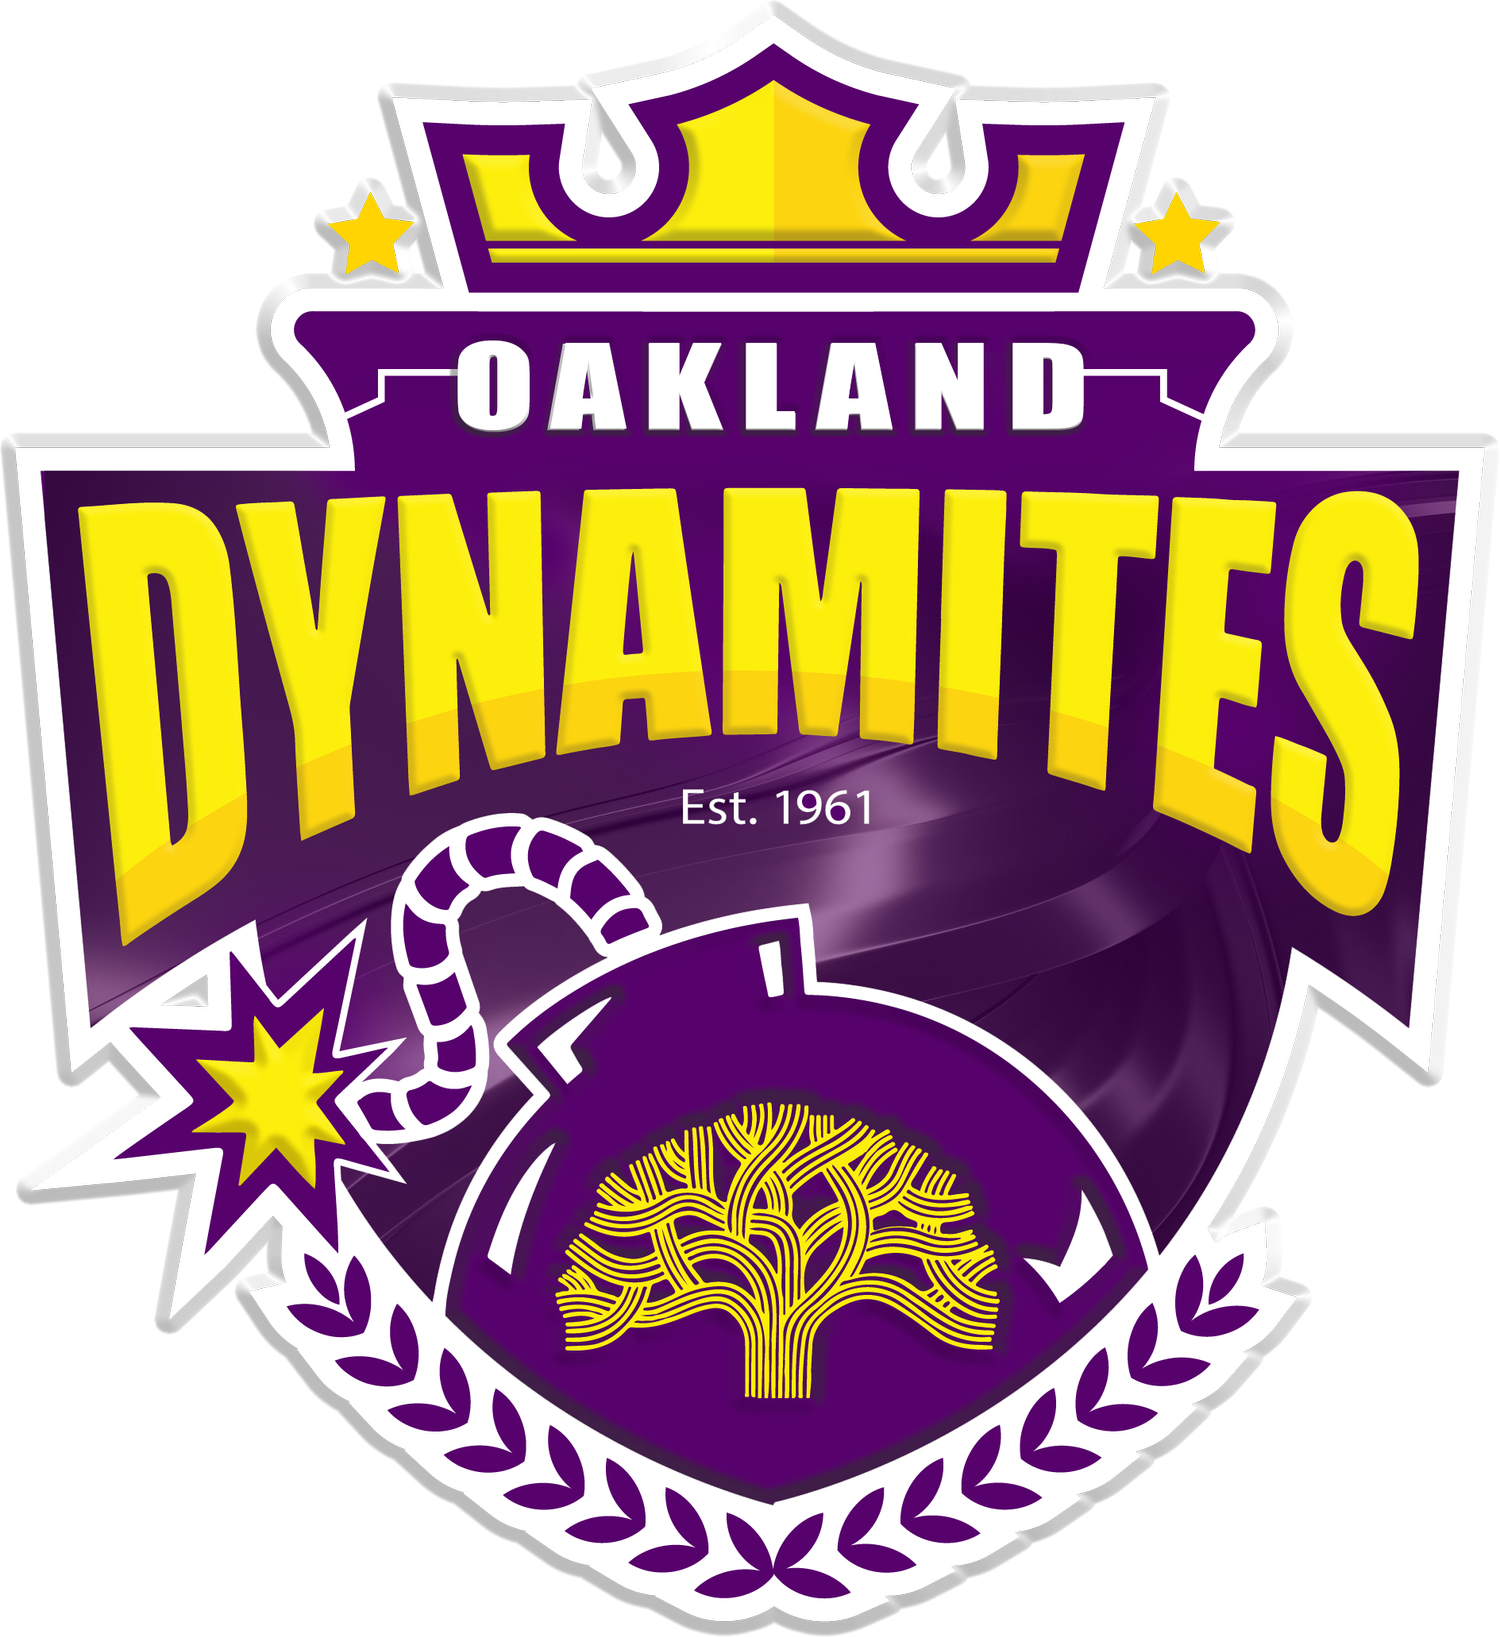 Oakland Dynamites